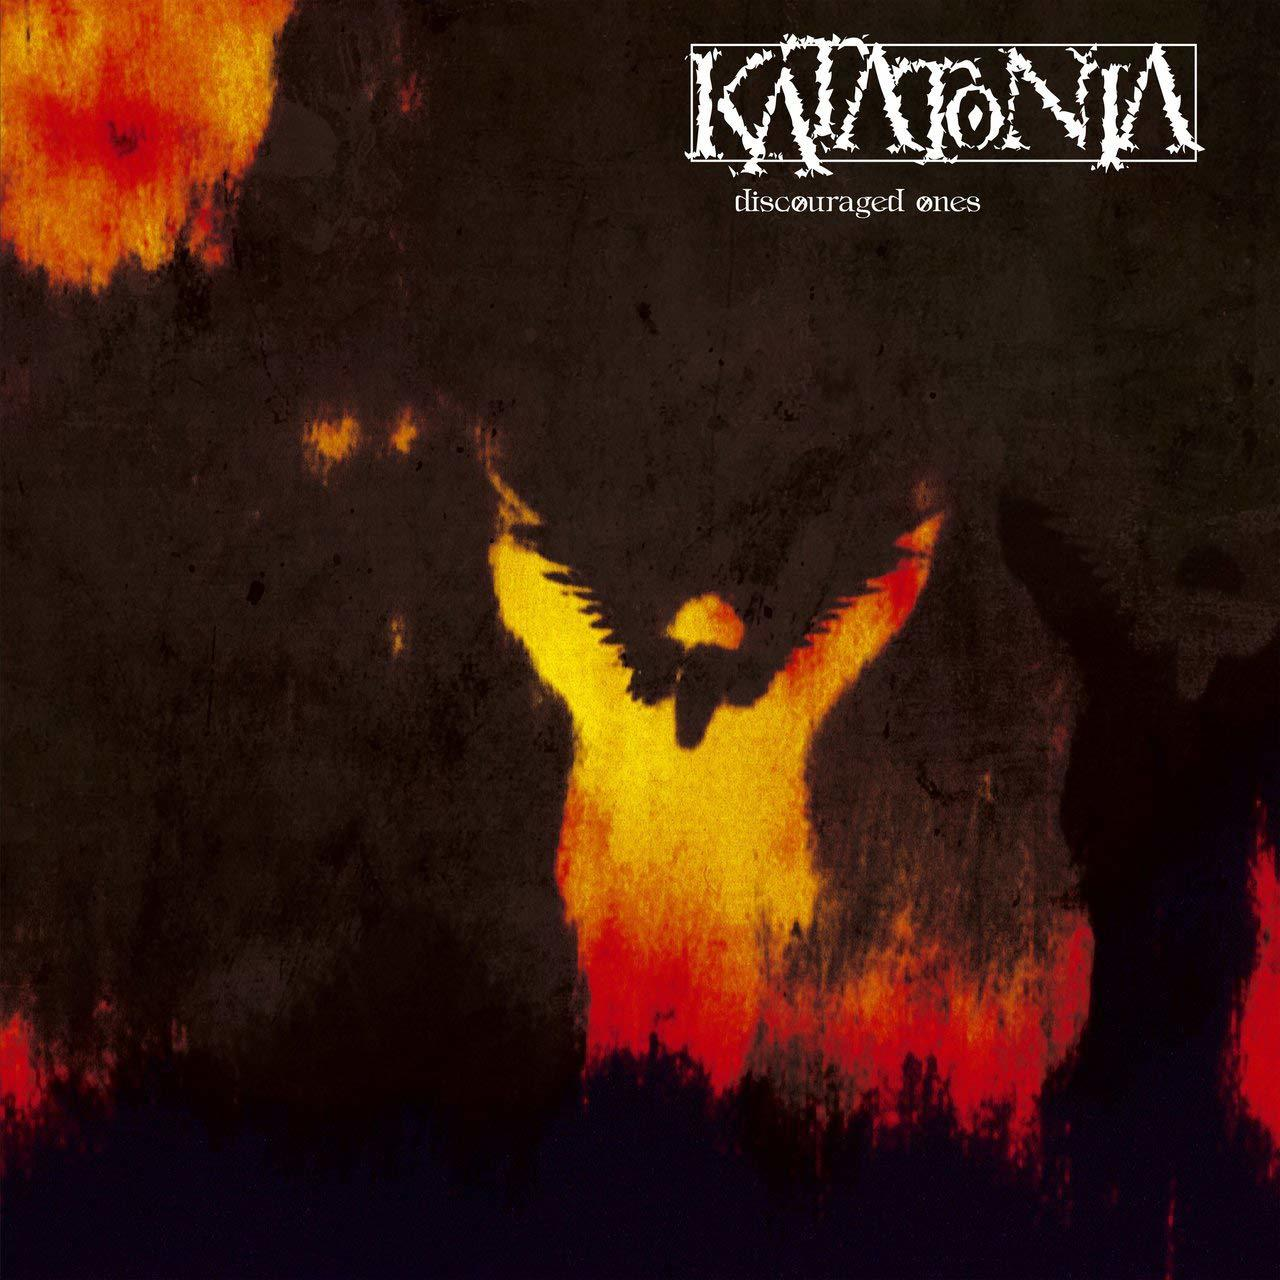 Katatonia - Discouraged Ones - (Vinyl)